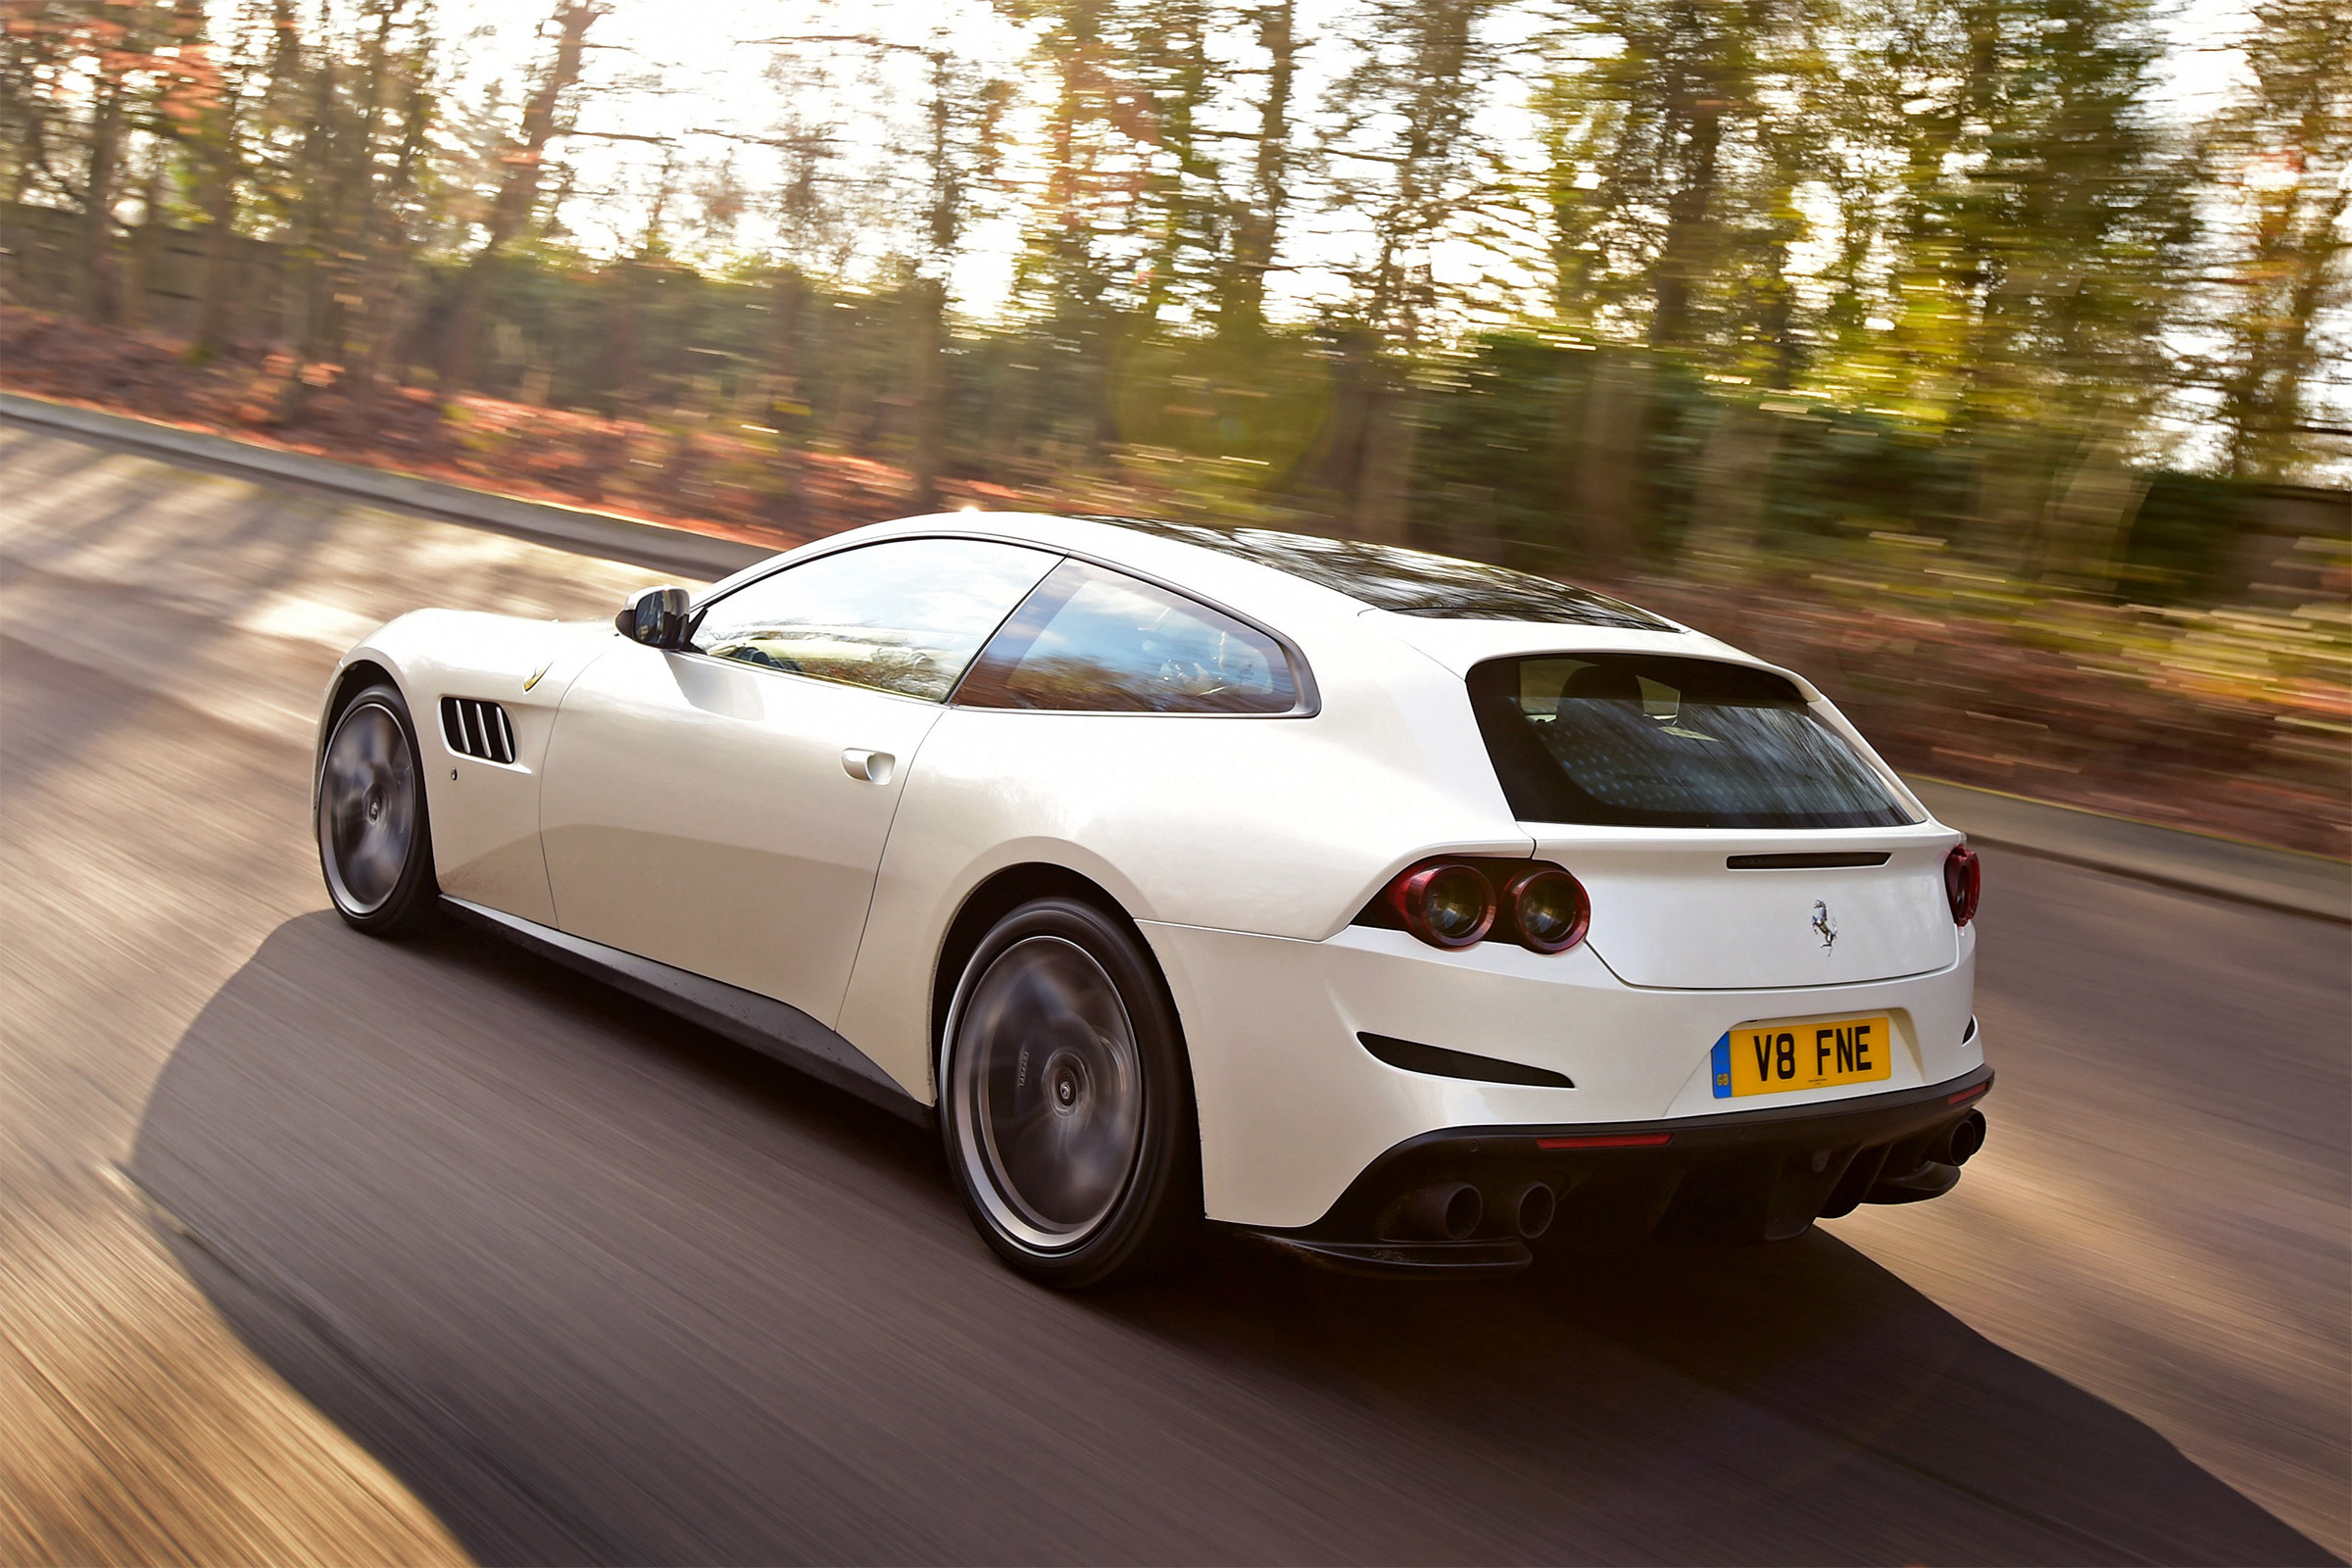 Ferrari GTC4 Lusso, T model unveiling, High-resolution wallpapers, Car enthusiasts' dream, 2400x1600 HD Desktop